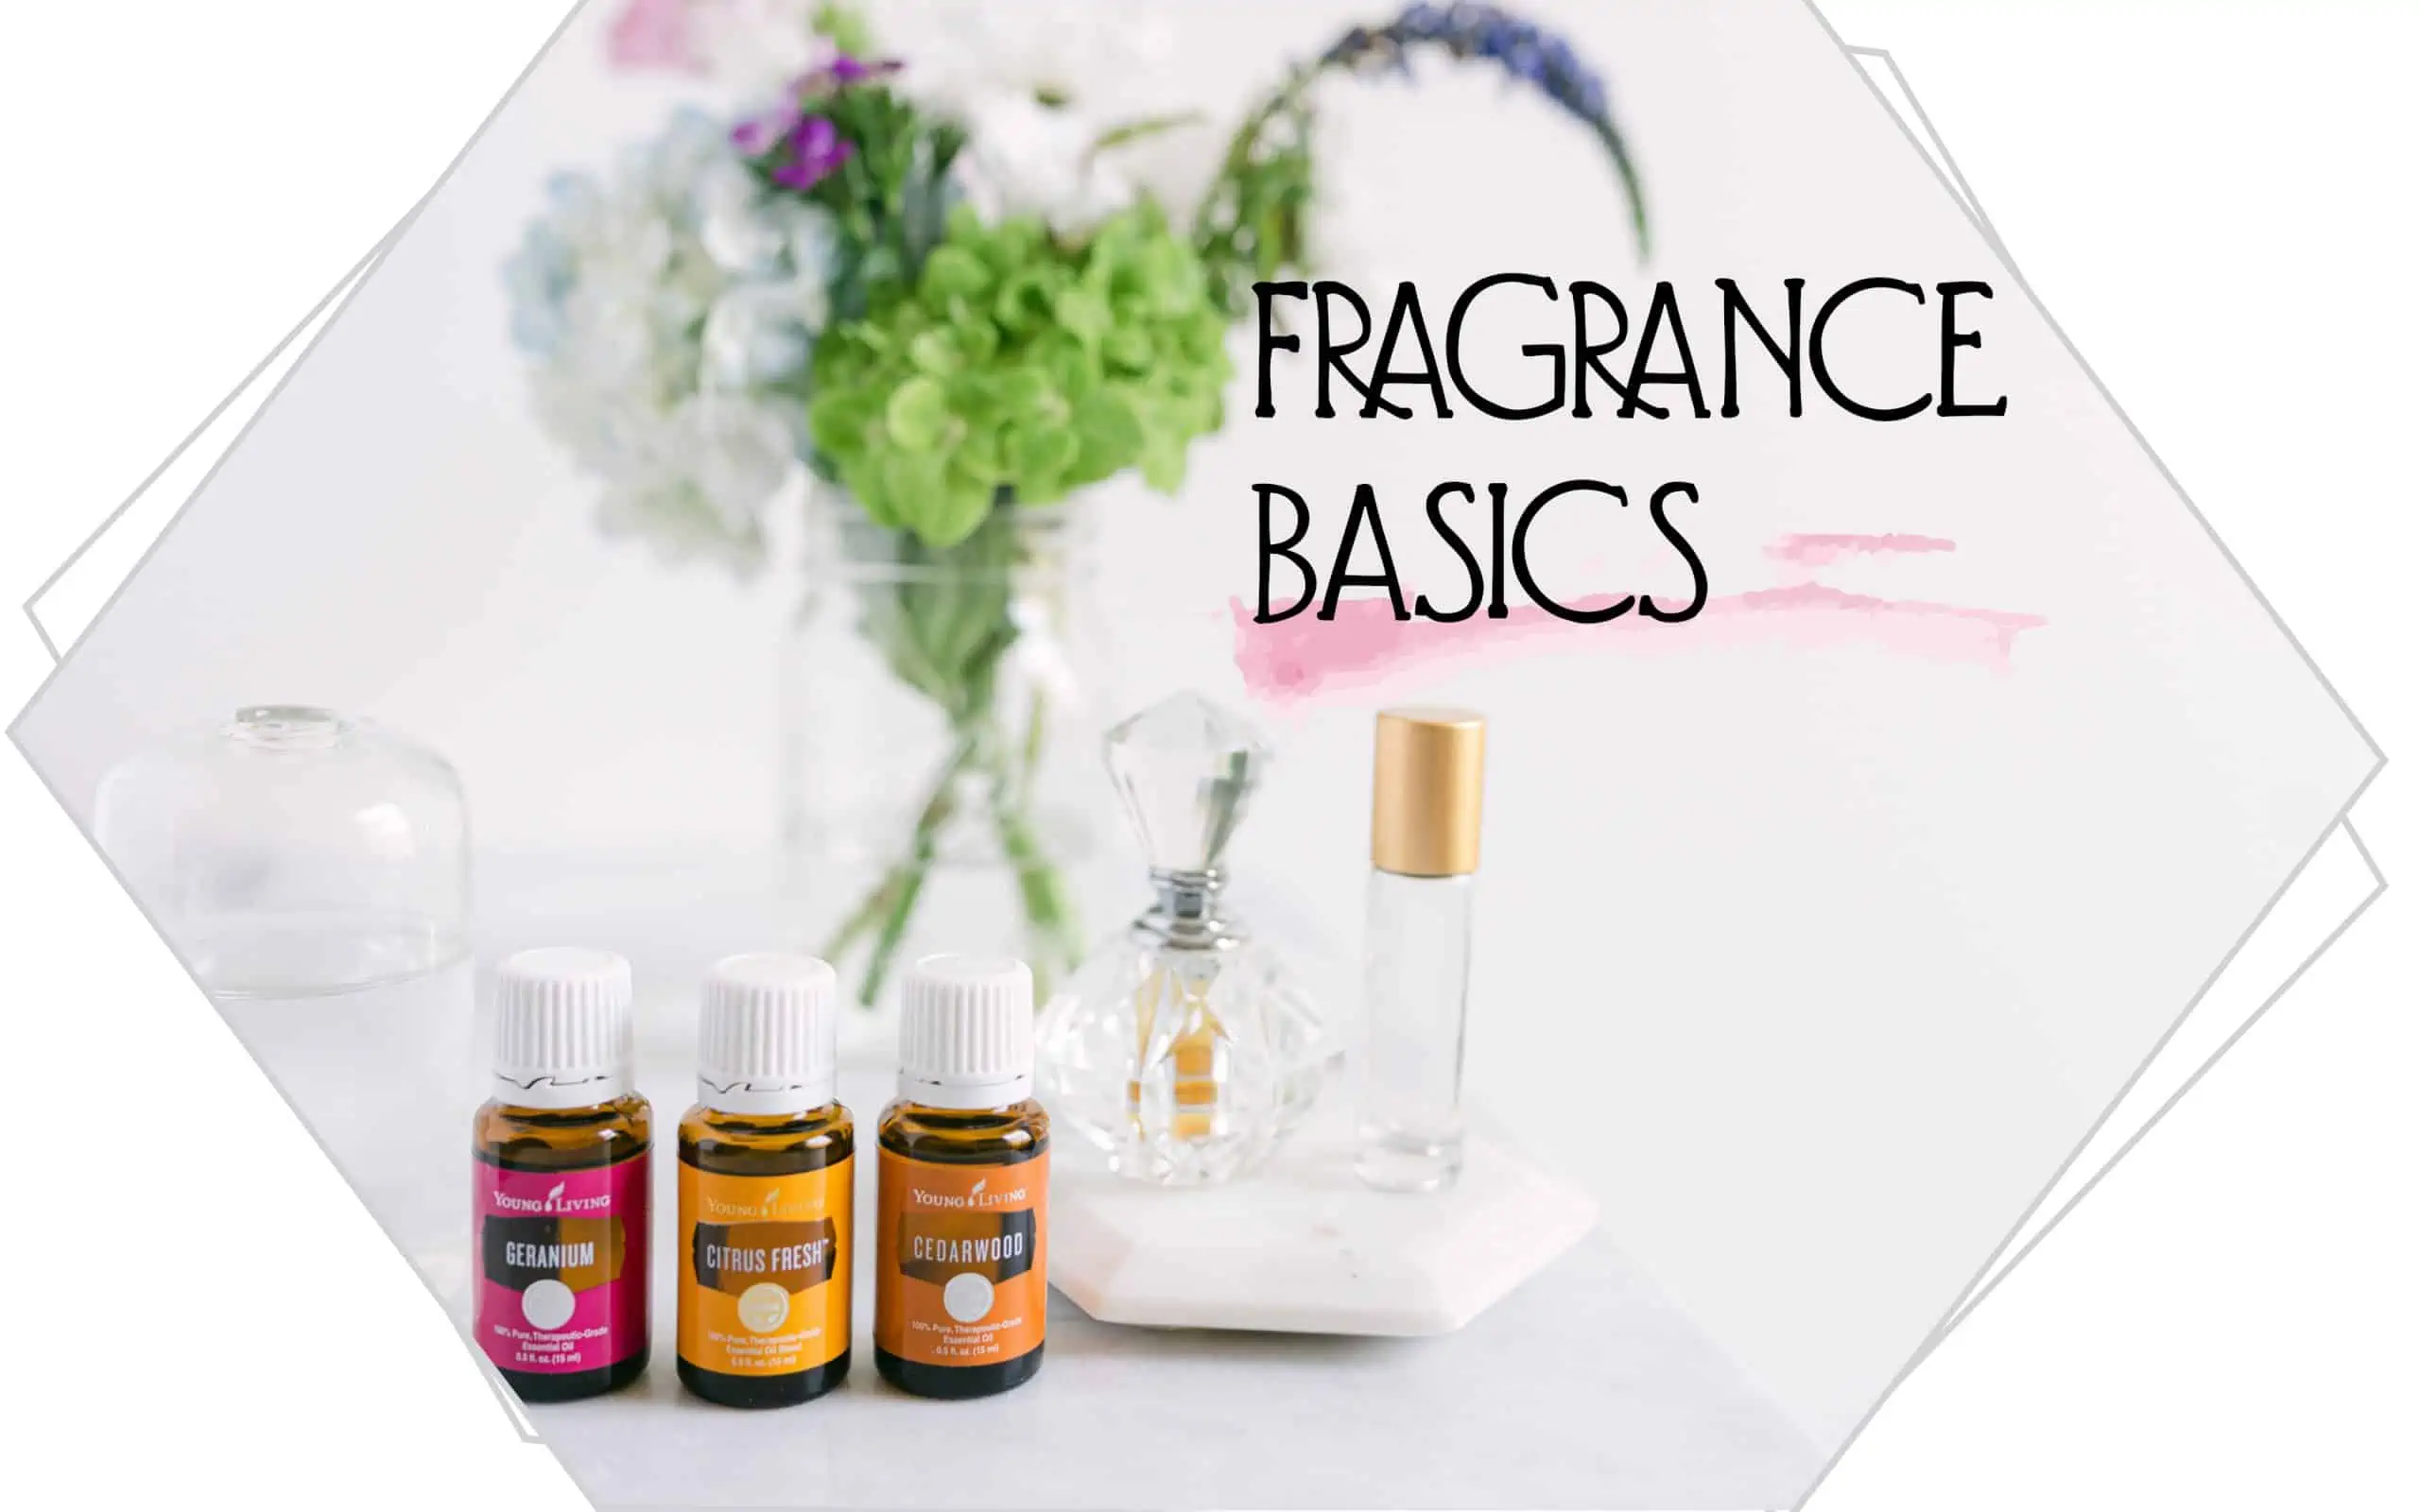 Fragrance basics with essential oil bottles. 